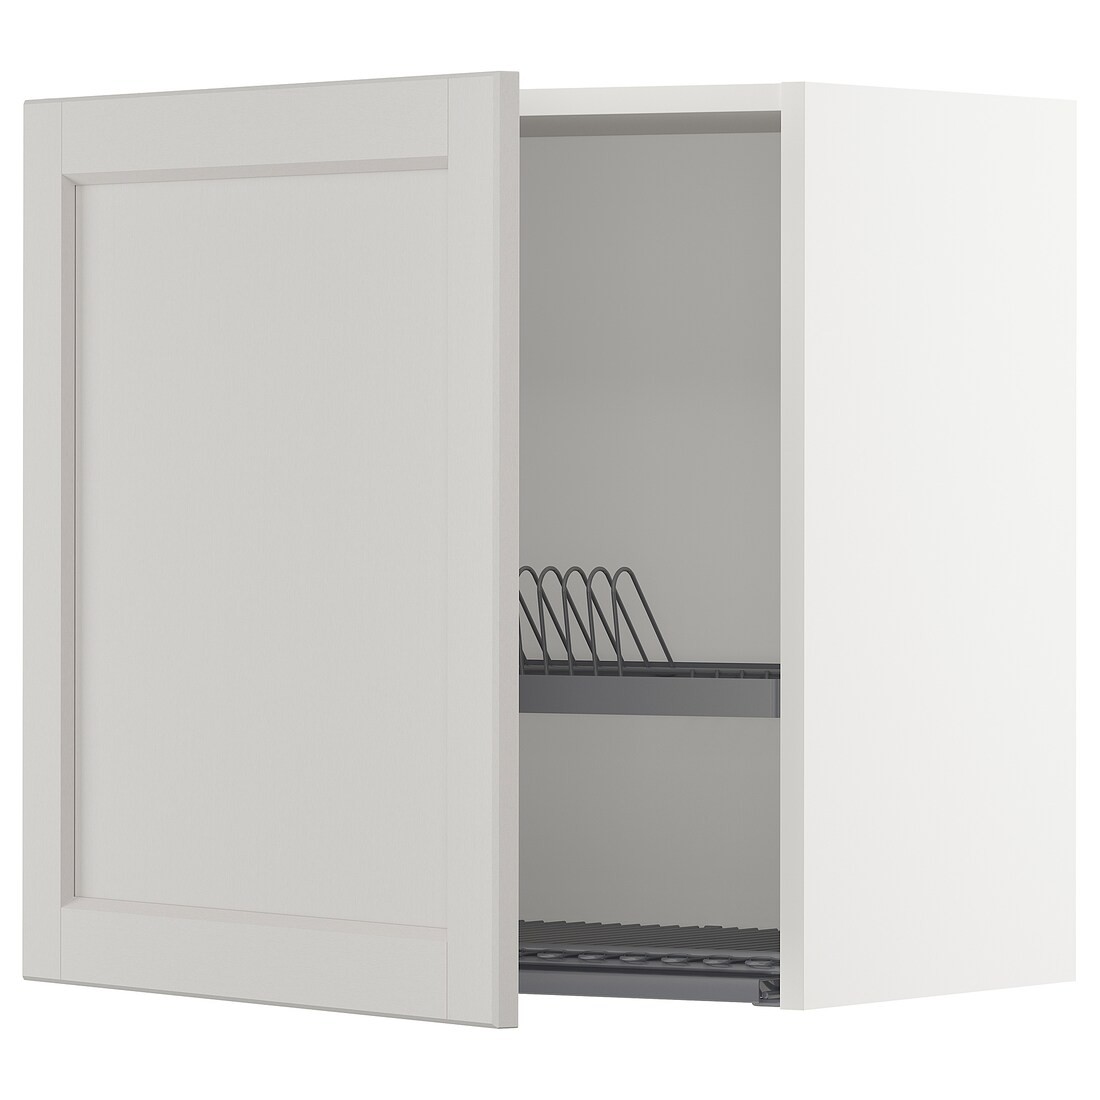 METOD МЕТОД Навесной шкаф с сушилкой, белый / Lerhyttan светло-серый, 60x60 см